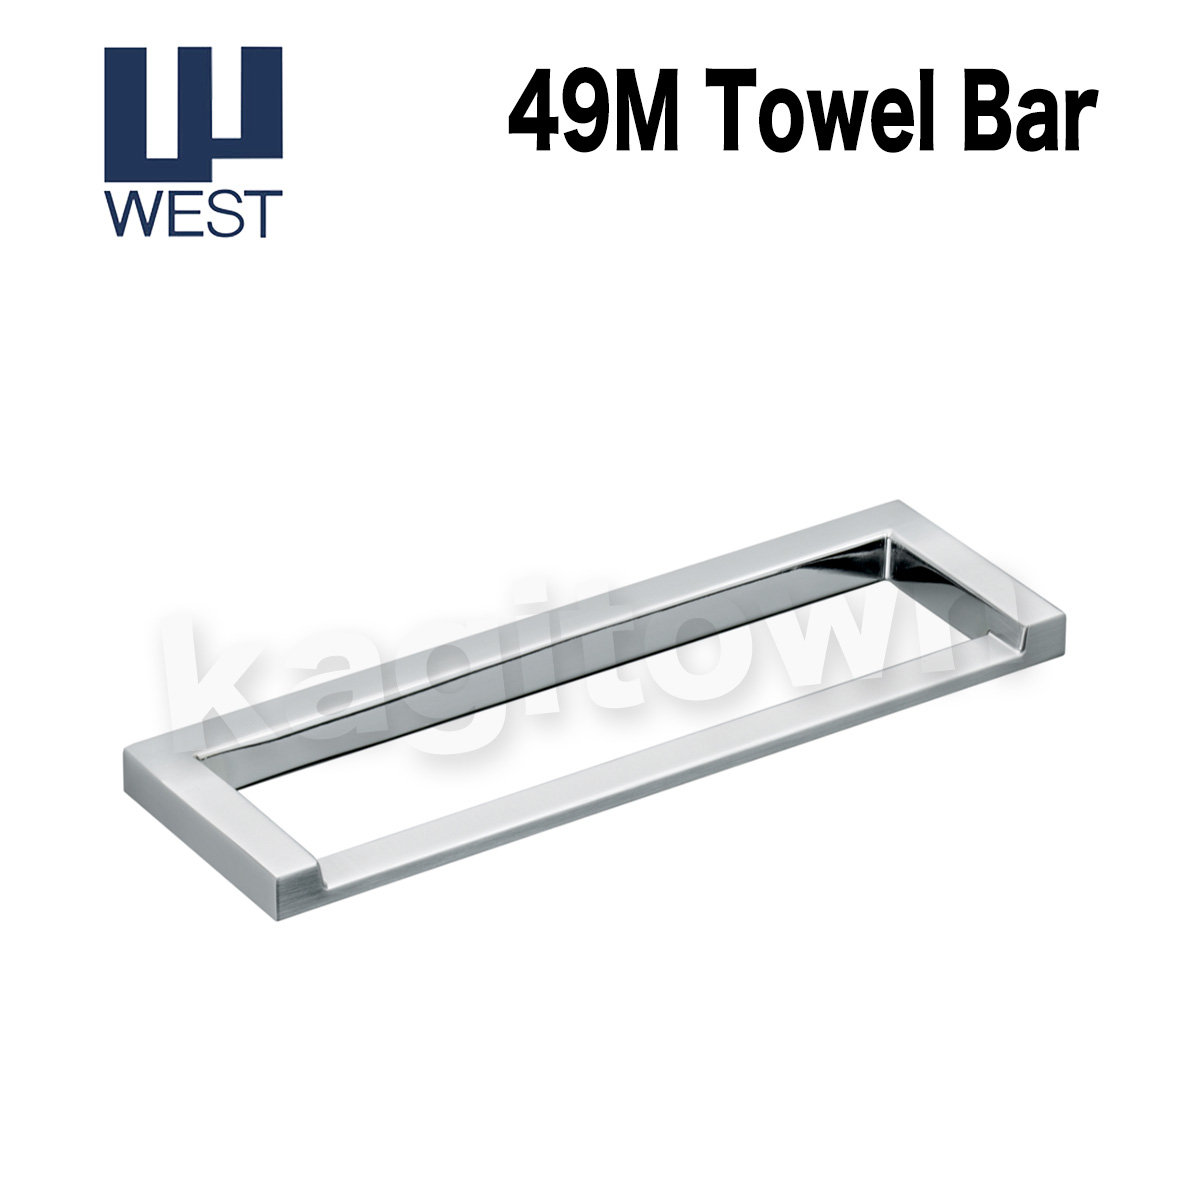 WEST 【ウエスト】タオルバー[WEST-49M]3edzero 49M Towel Bar